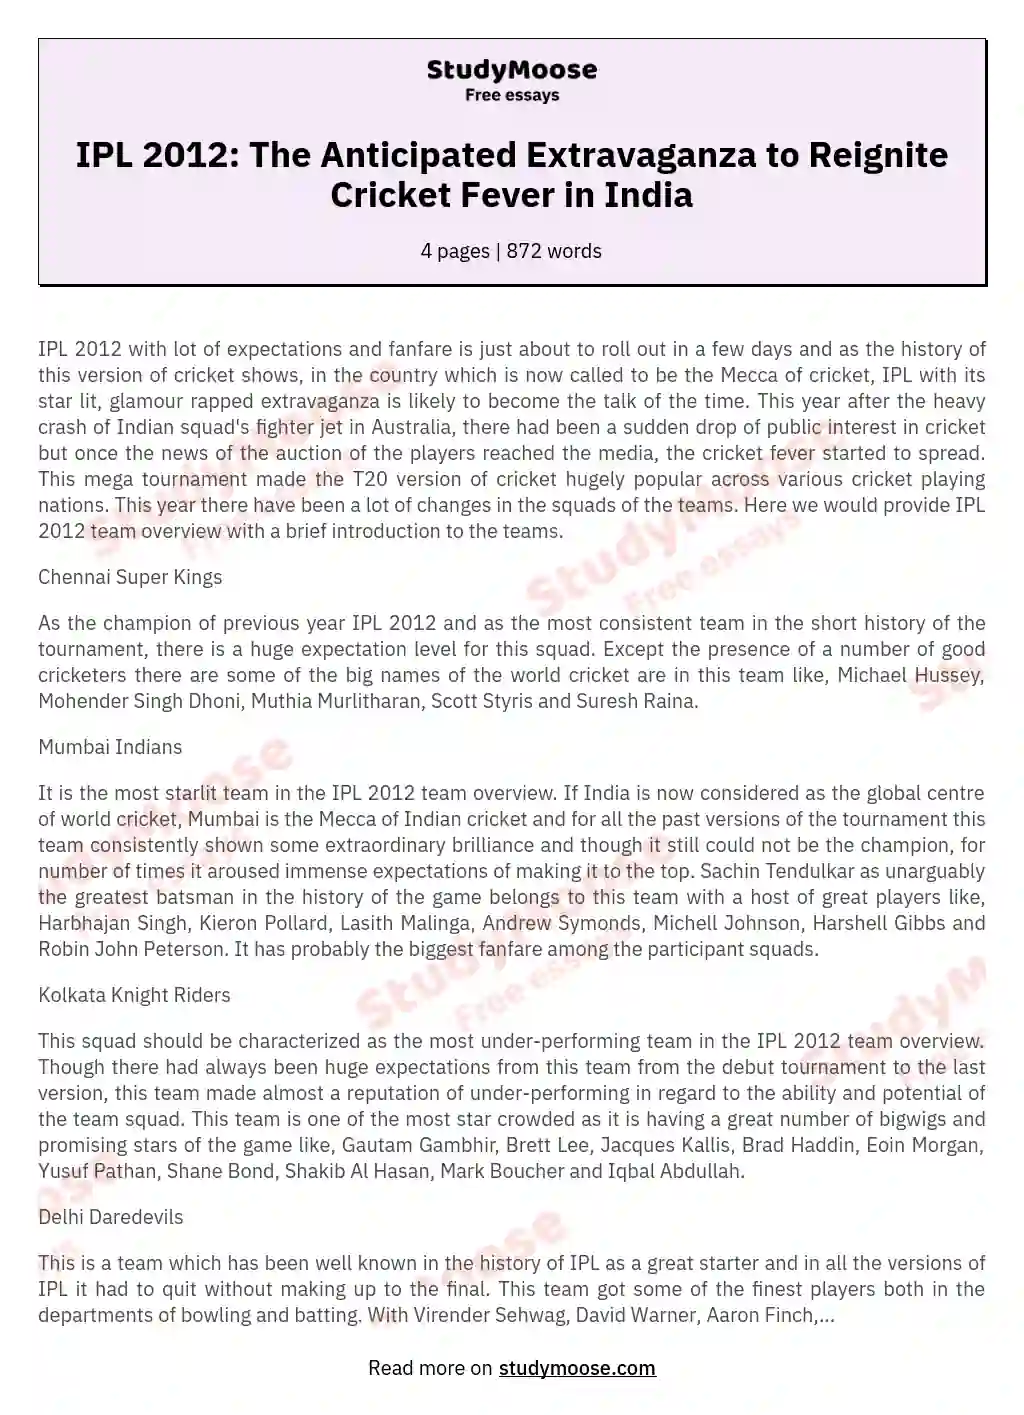 IPL 2012: The Anticipated Extravaganza to Reignite Cricket Fever in India